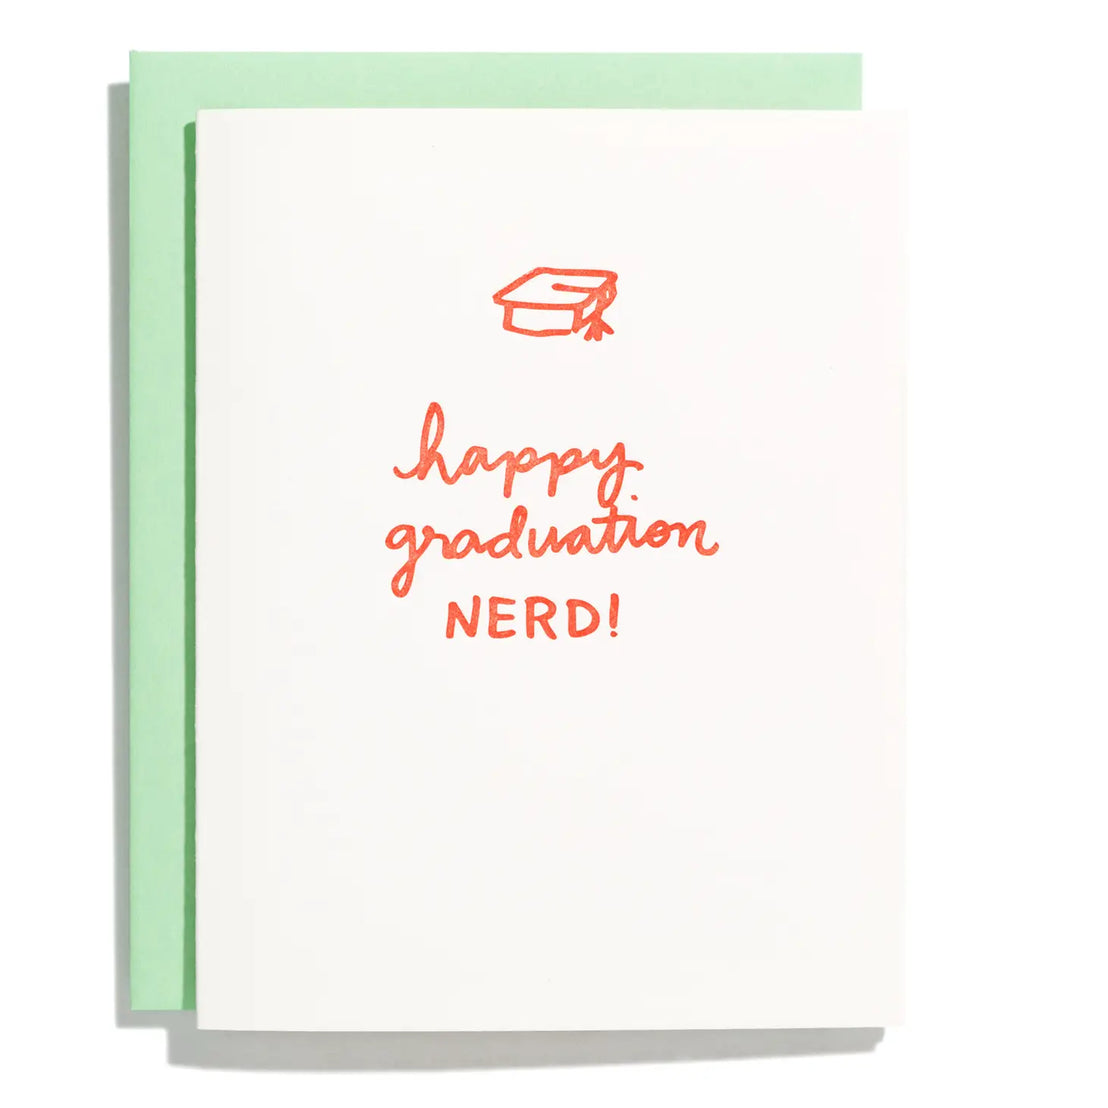 Graduation Nerd, Shorthand Press